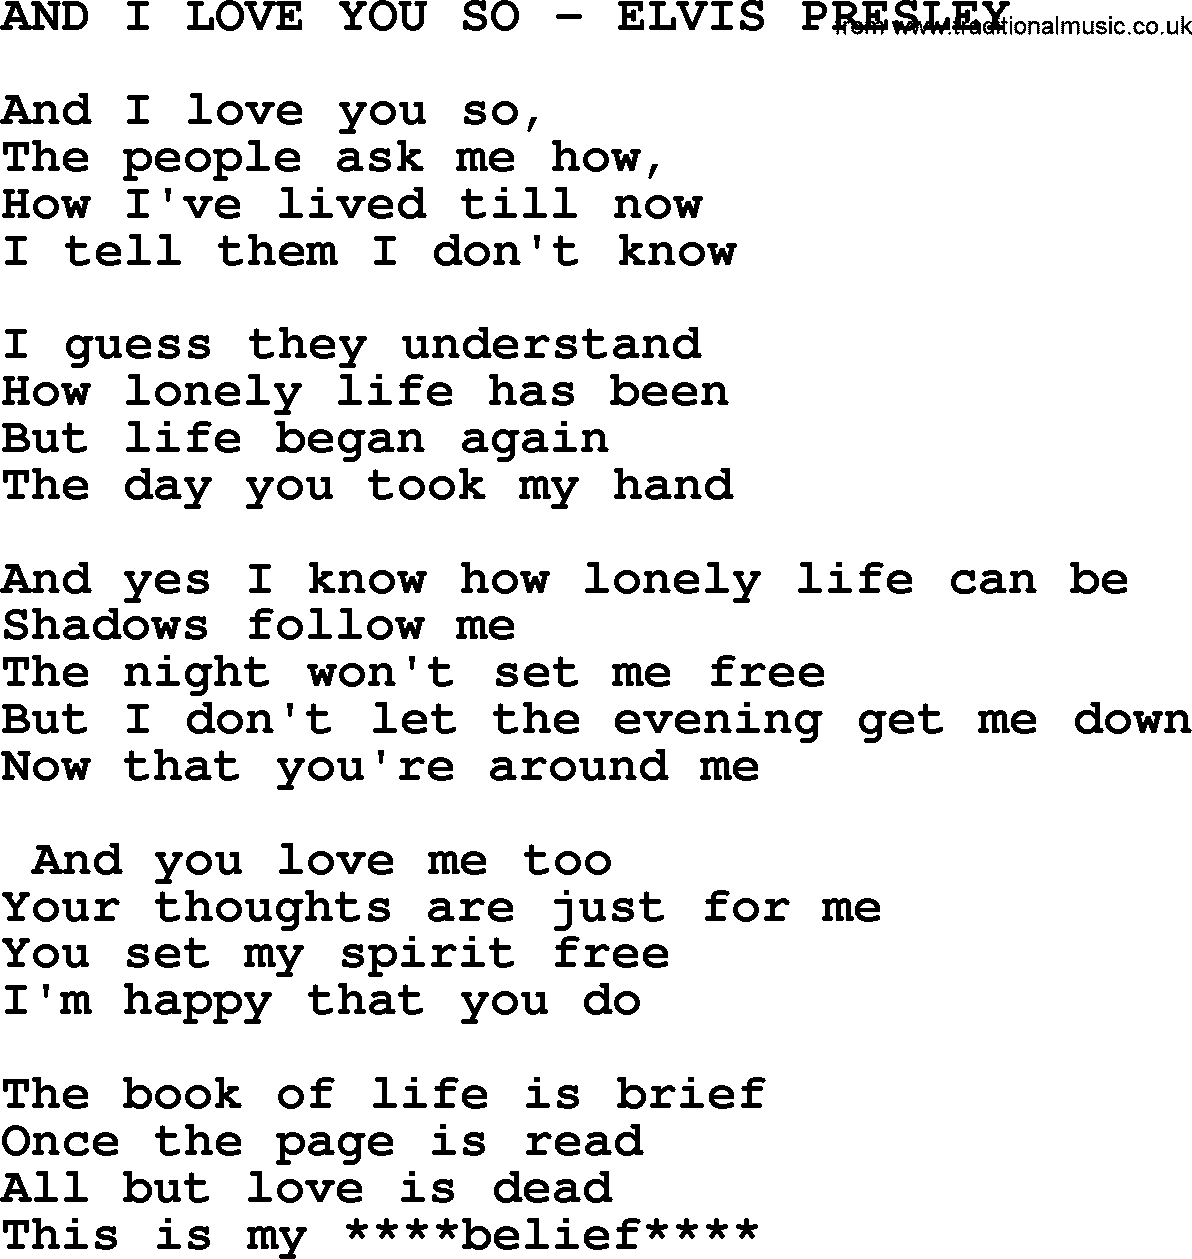 Elvis Presley song: And I Love You So-Elvis Presley-.txt lyrics and chords